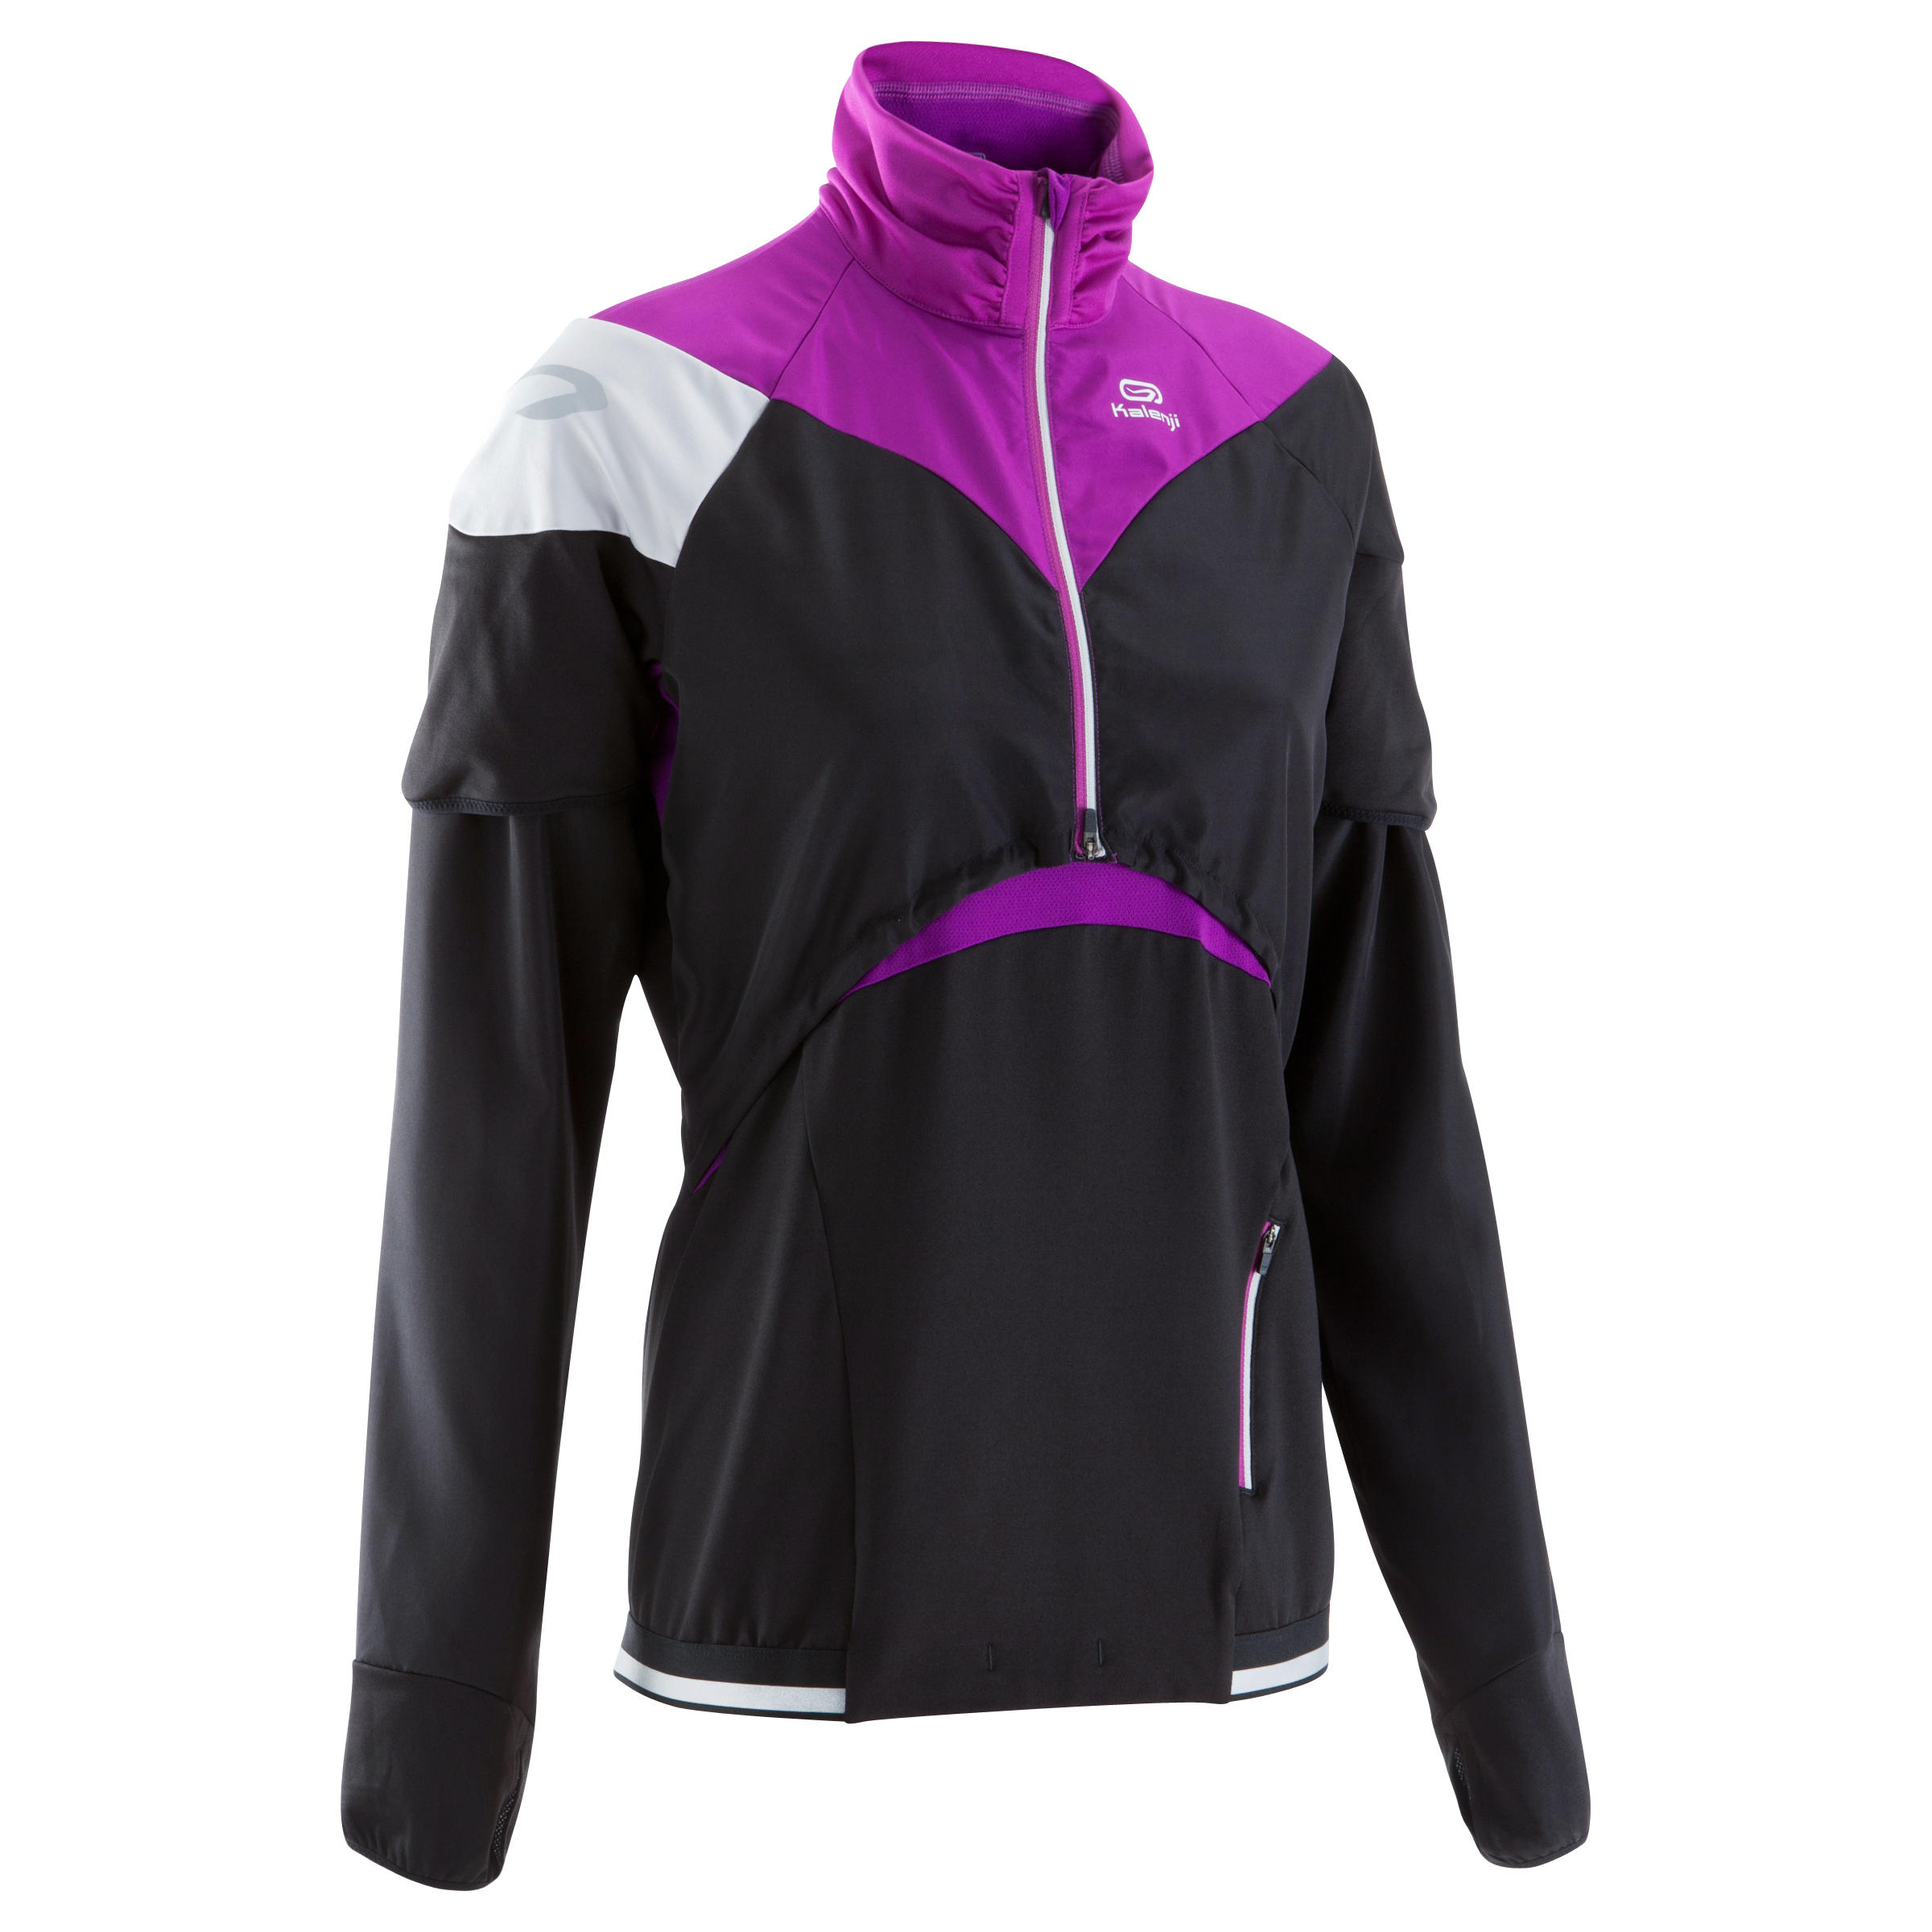 KALENJI Kalenji Evolutiv Women's Running Jersey - Black/Purple